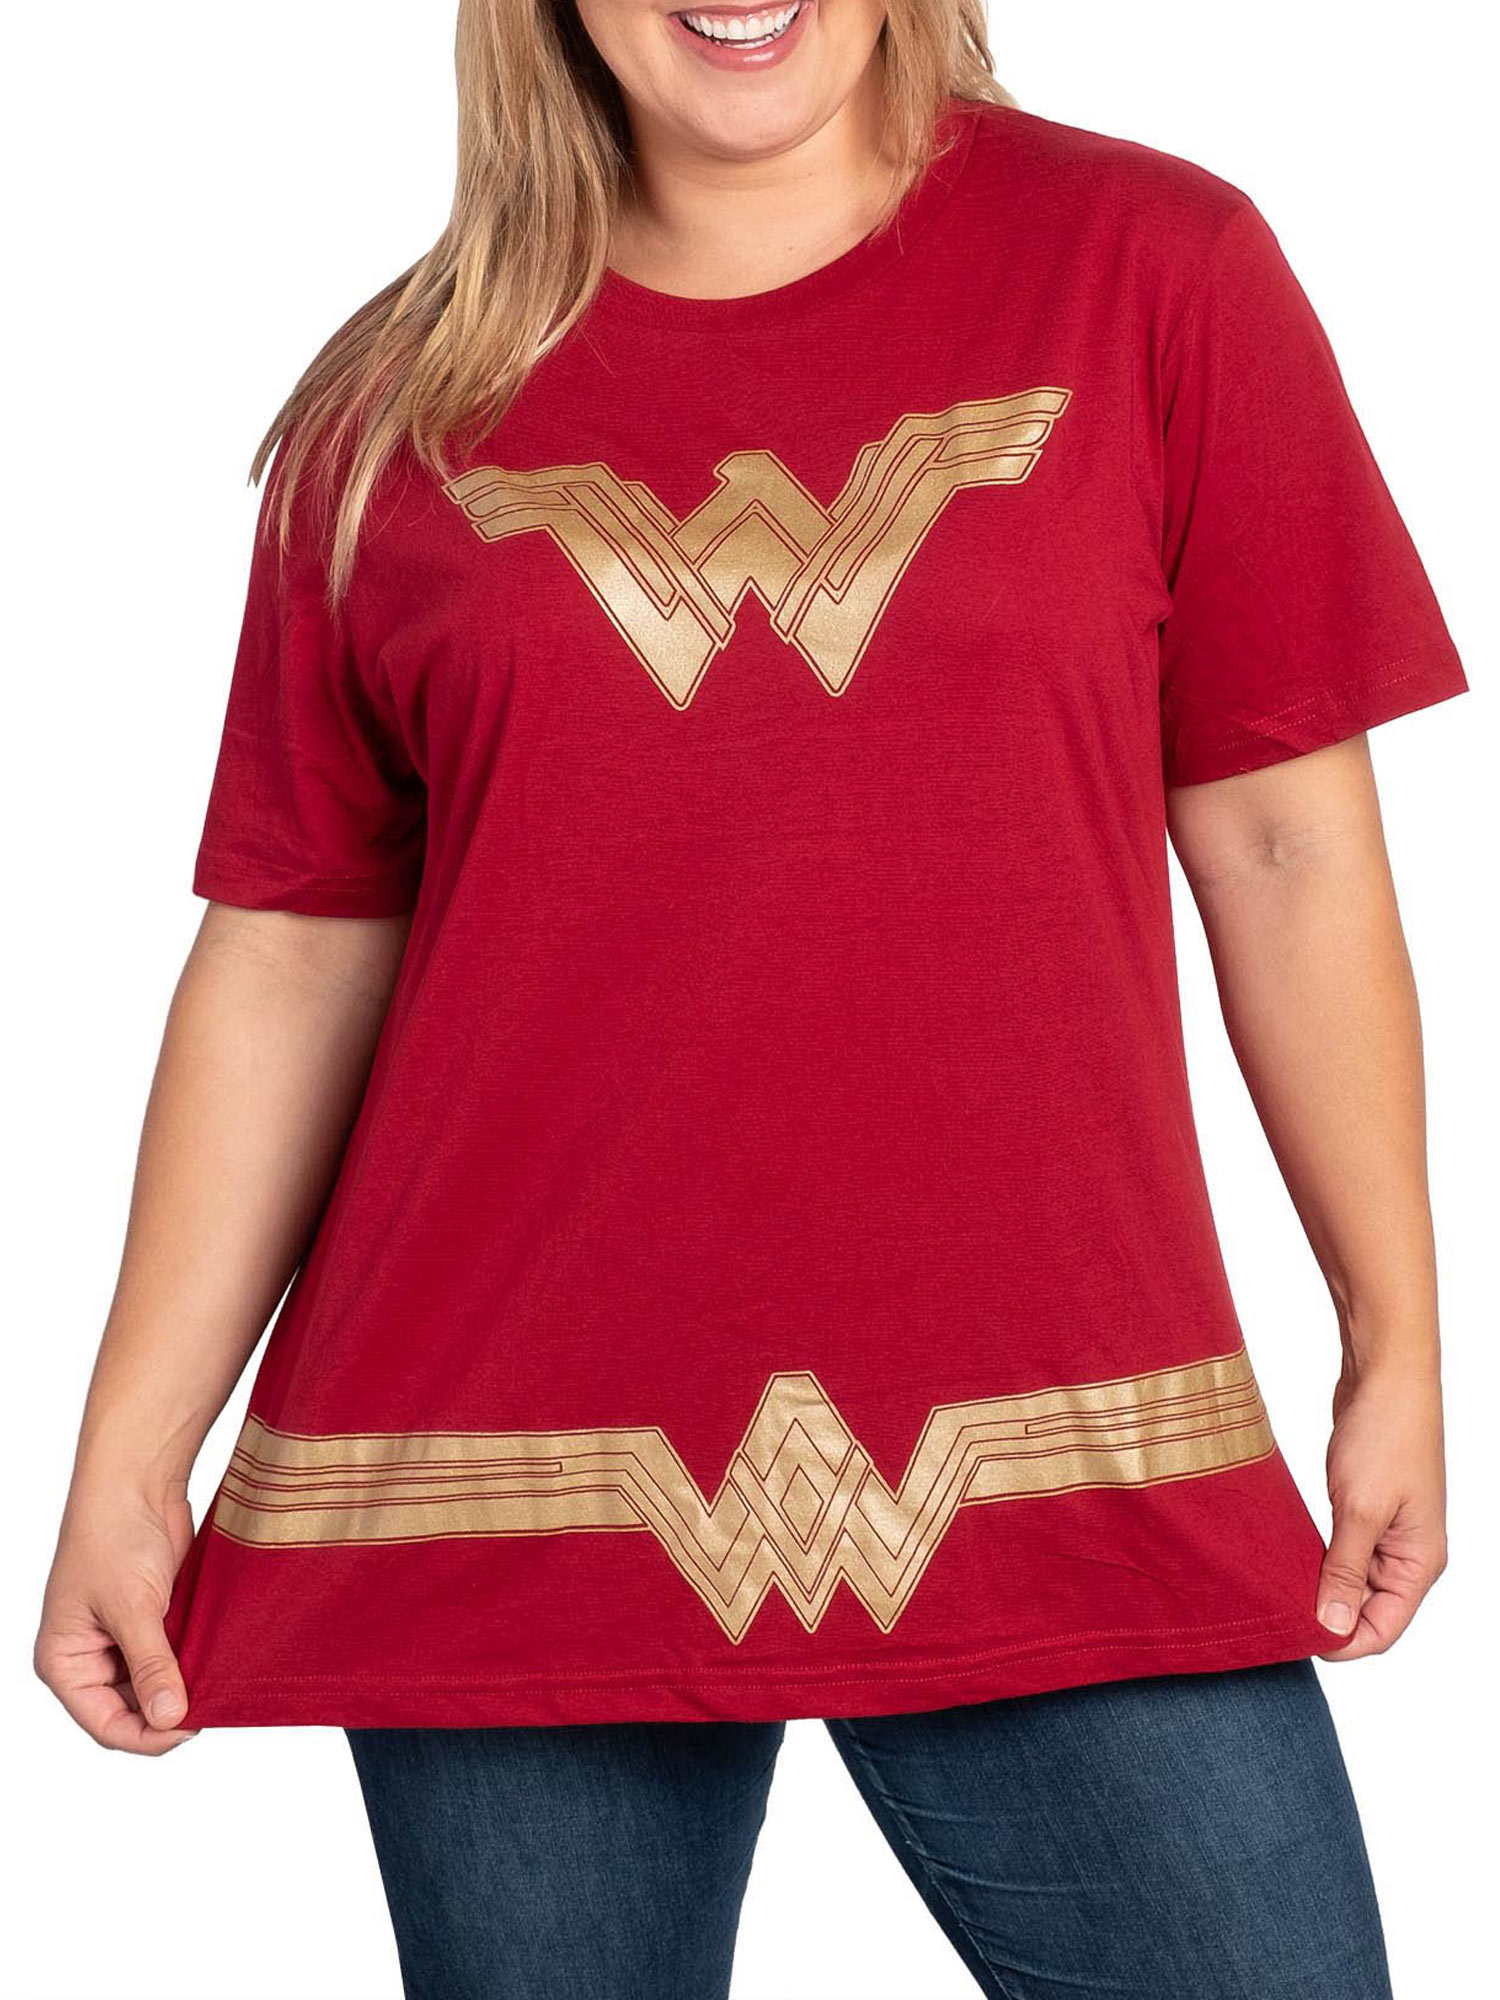 DC Comics Women's Plus Size Wonder Woman T-Shirt Red Gold DC Comics Costume Tee